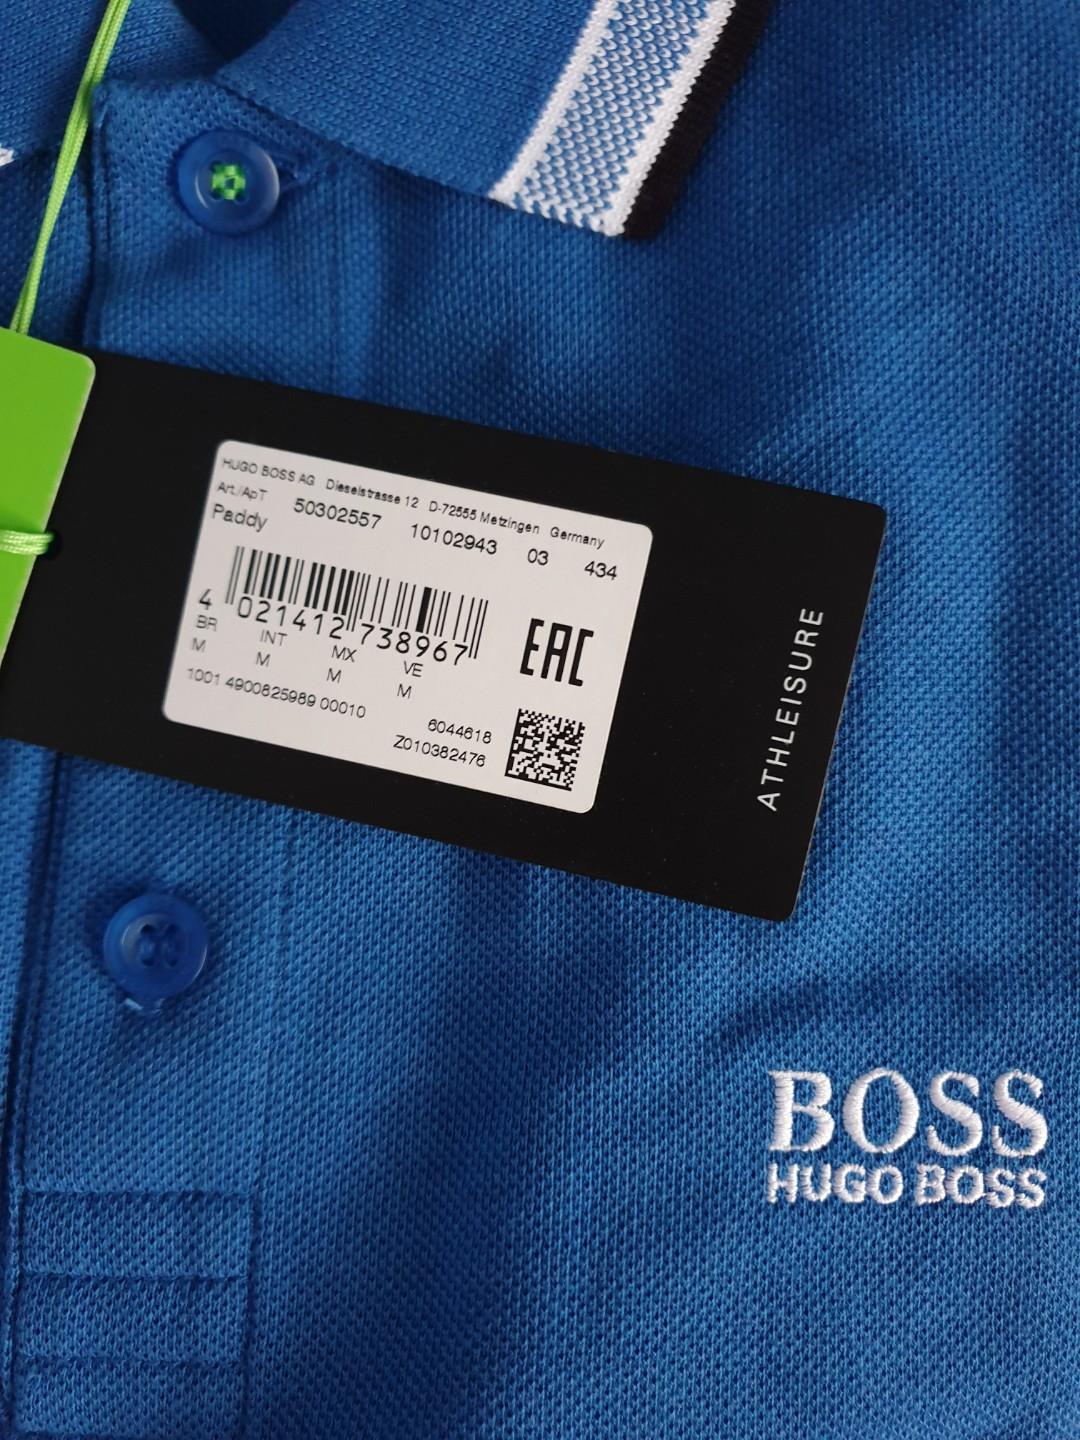 New Authentic Hugo Boss Polo Shirt, Men 